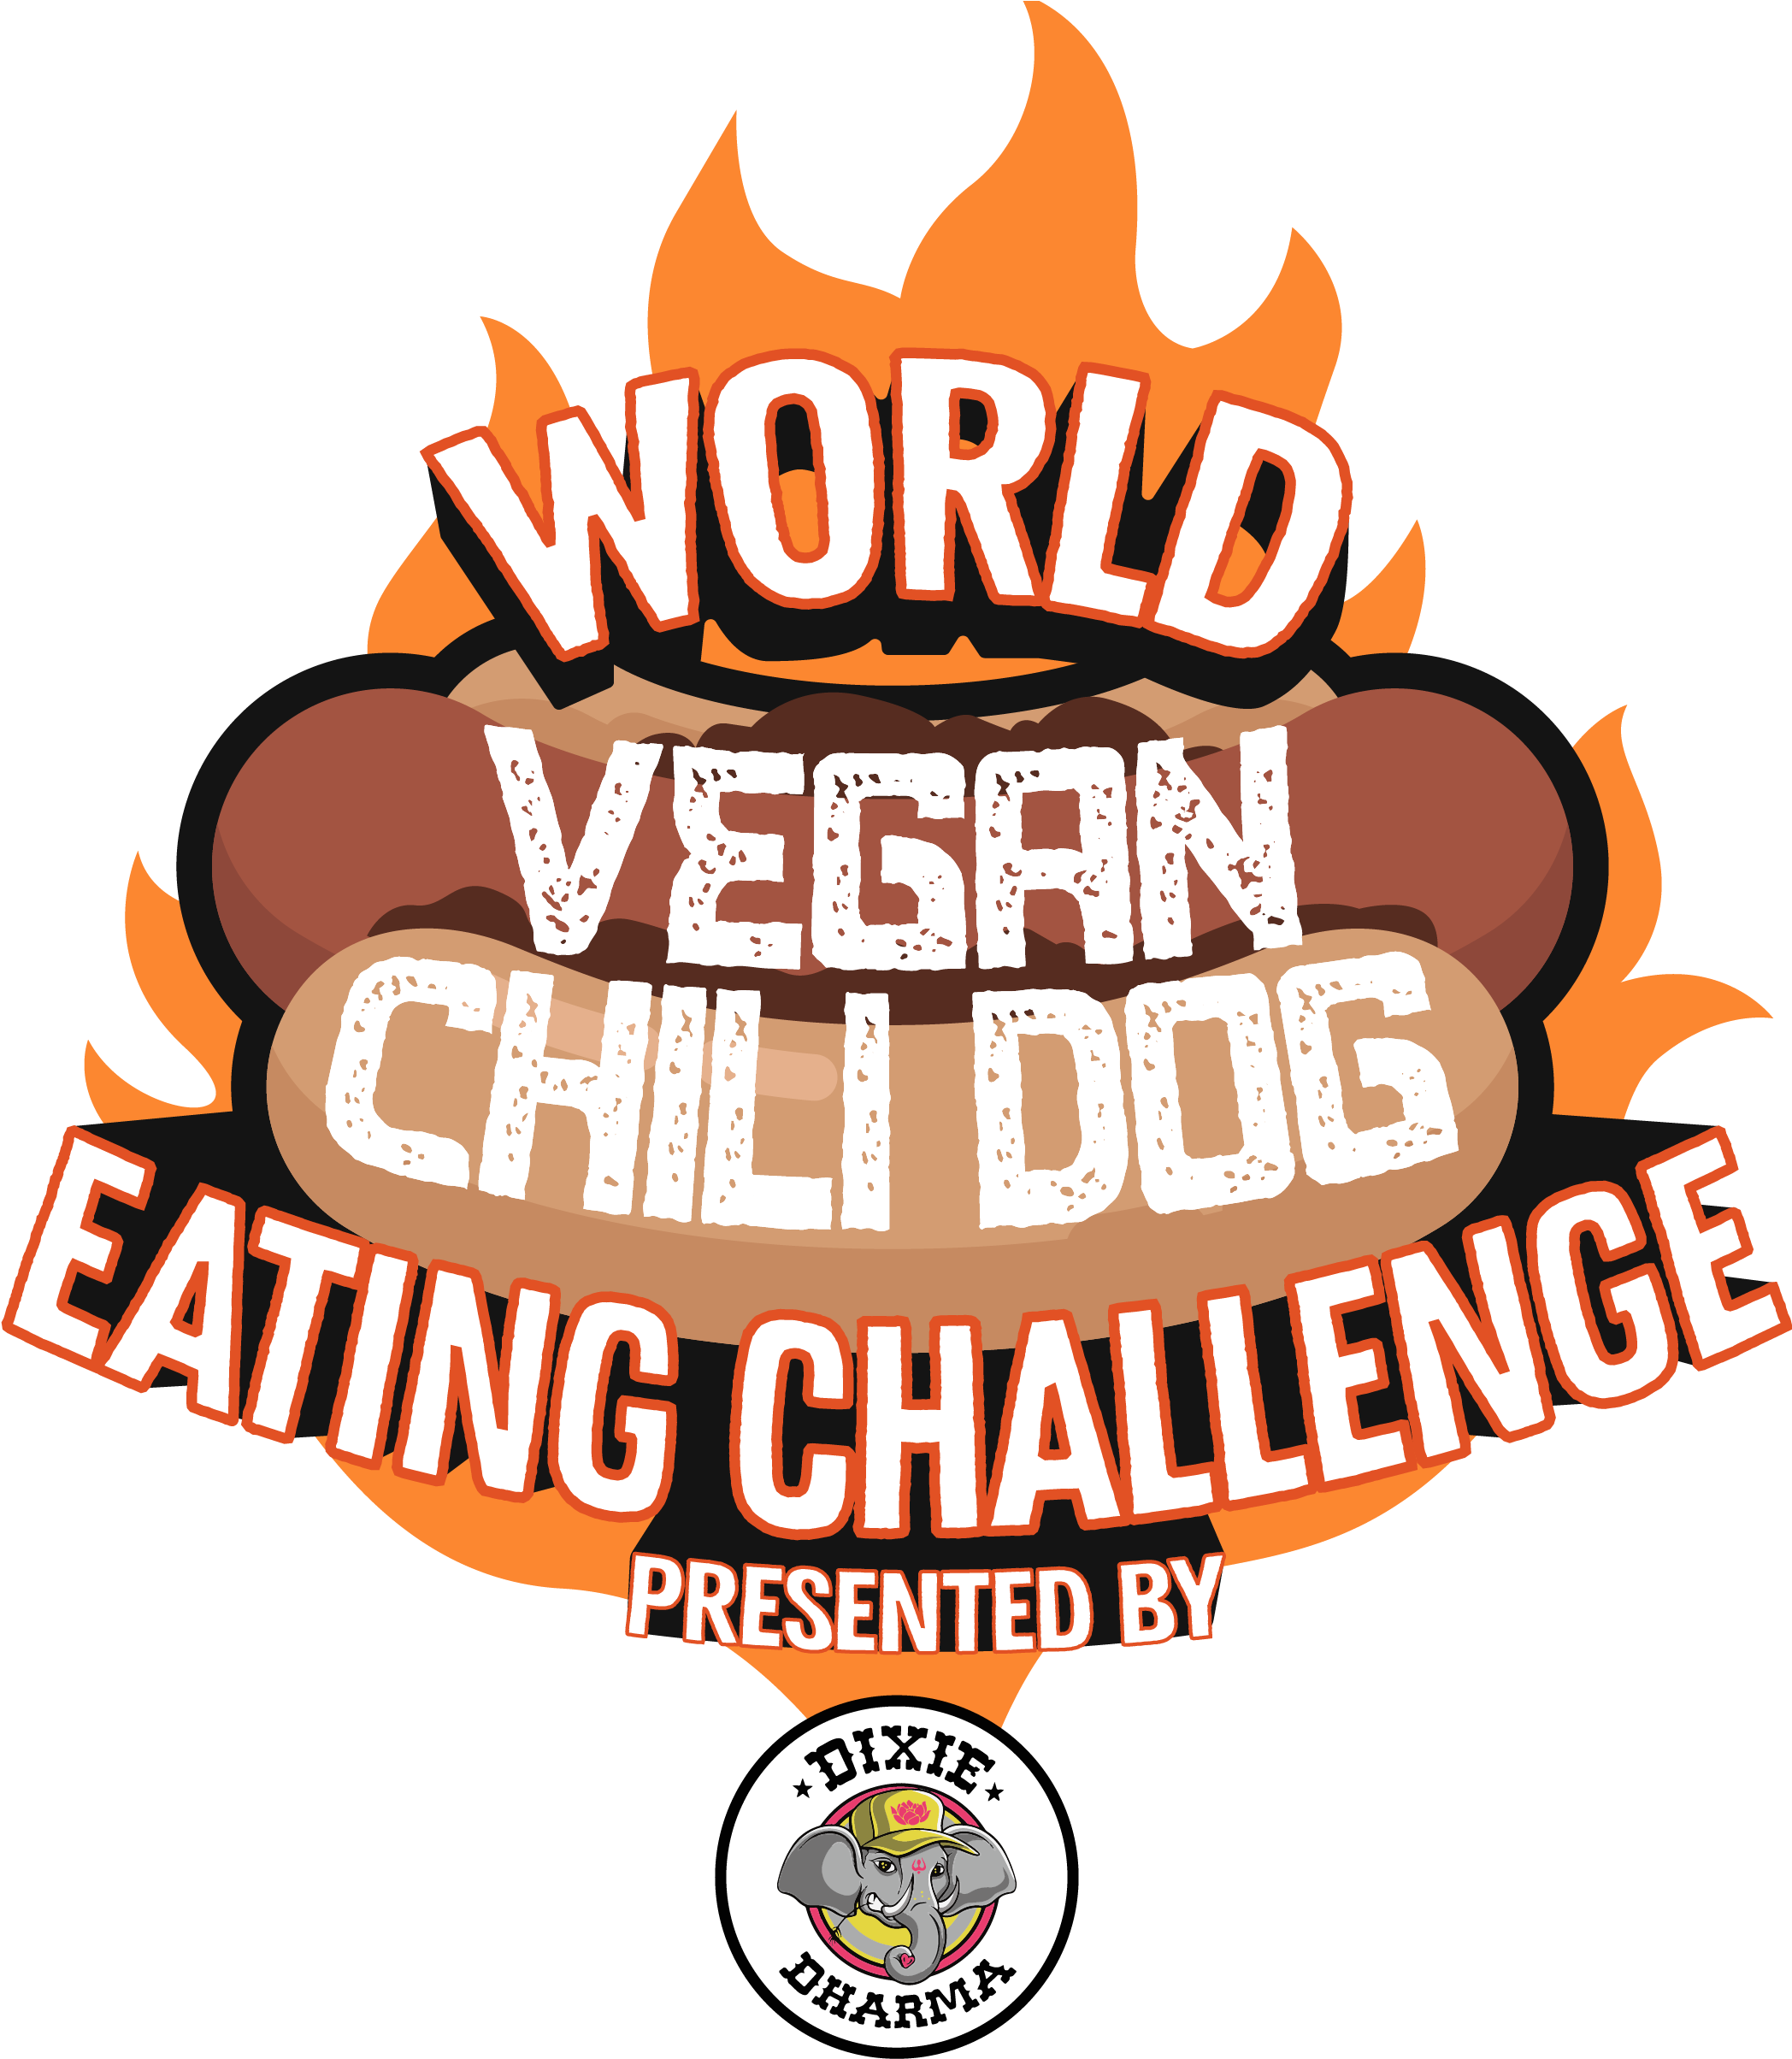 2019 Dixie Dharma World Vegan Chili Dog Eating Challenge - 2019 Dixie Dharma World Vegan Chili Dog Eating Challenge (2175x2600)